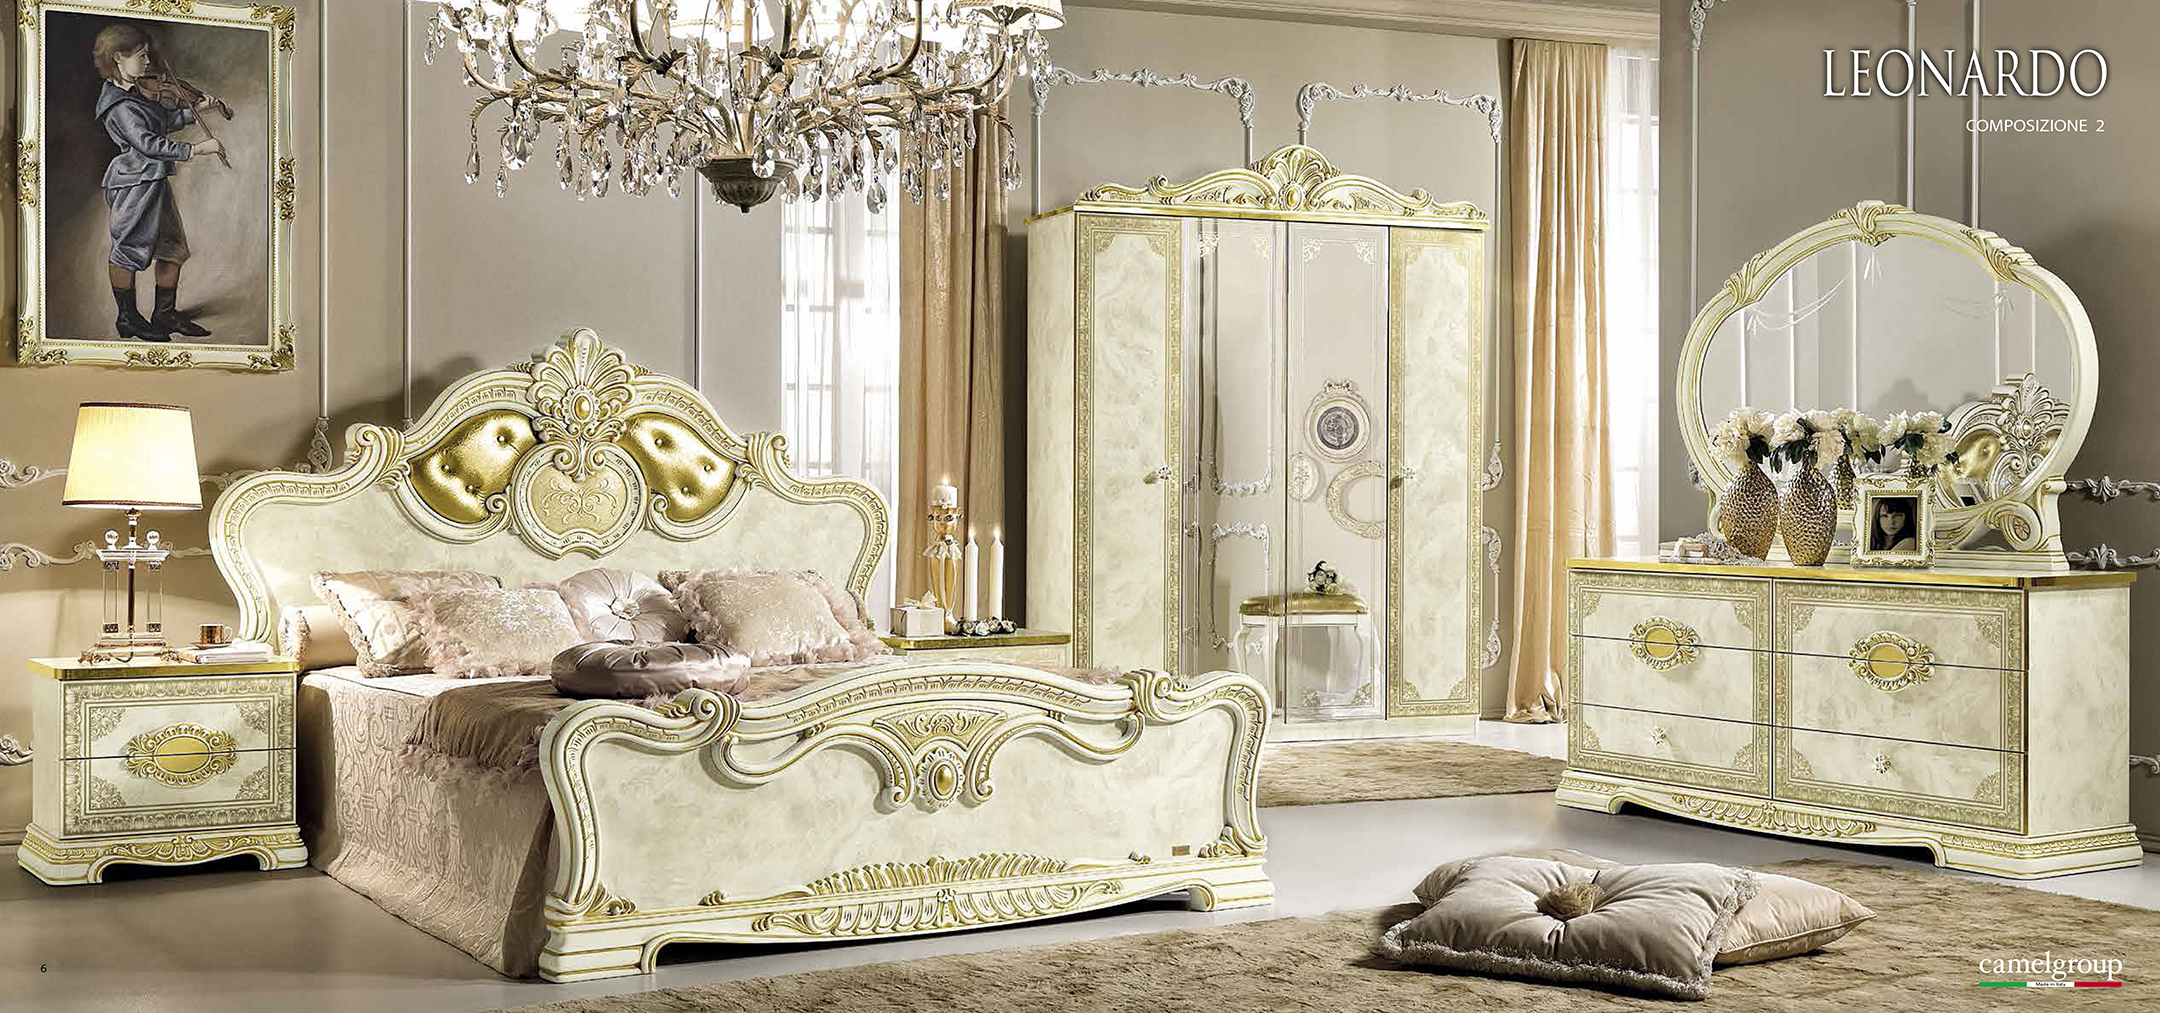 Bedroom Furniture Beds with storage Leonardo Bedroom Additional Items